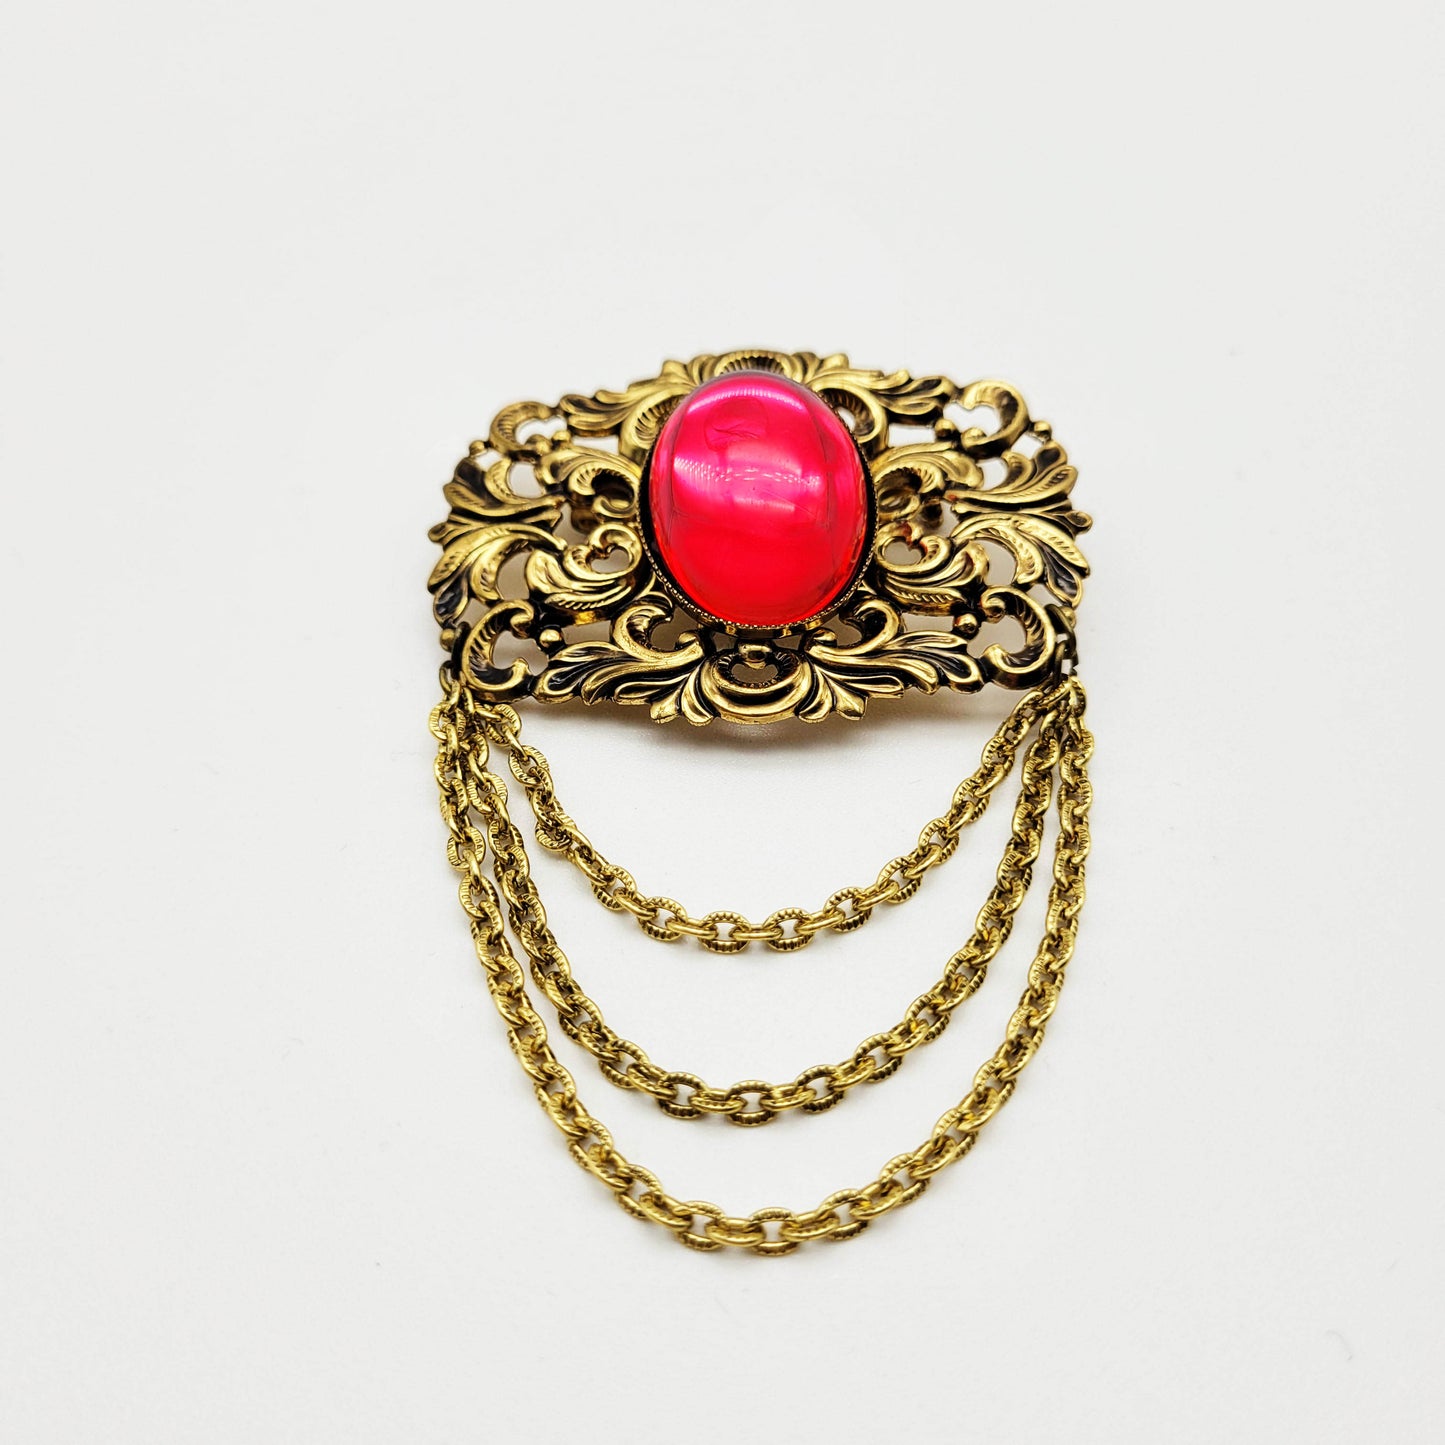 Vintage pink cabochon brooch